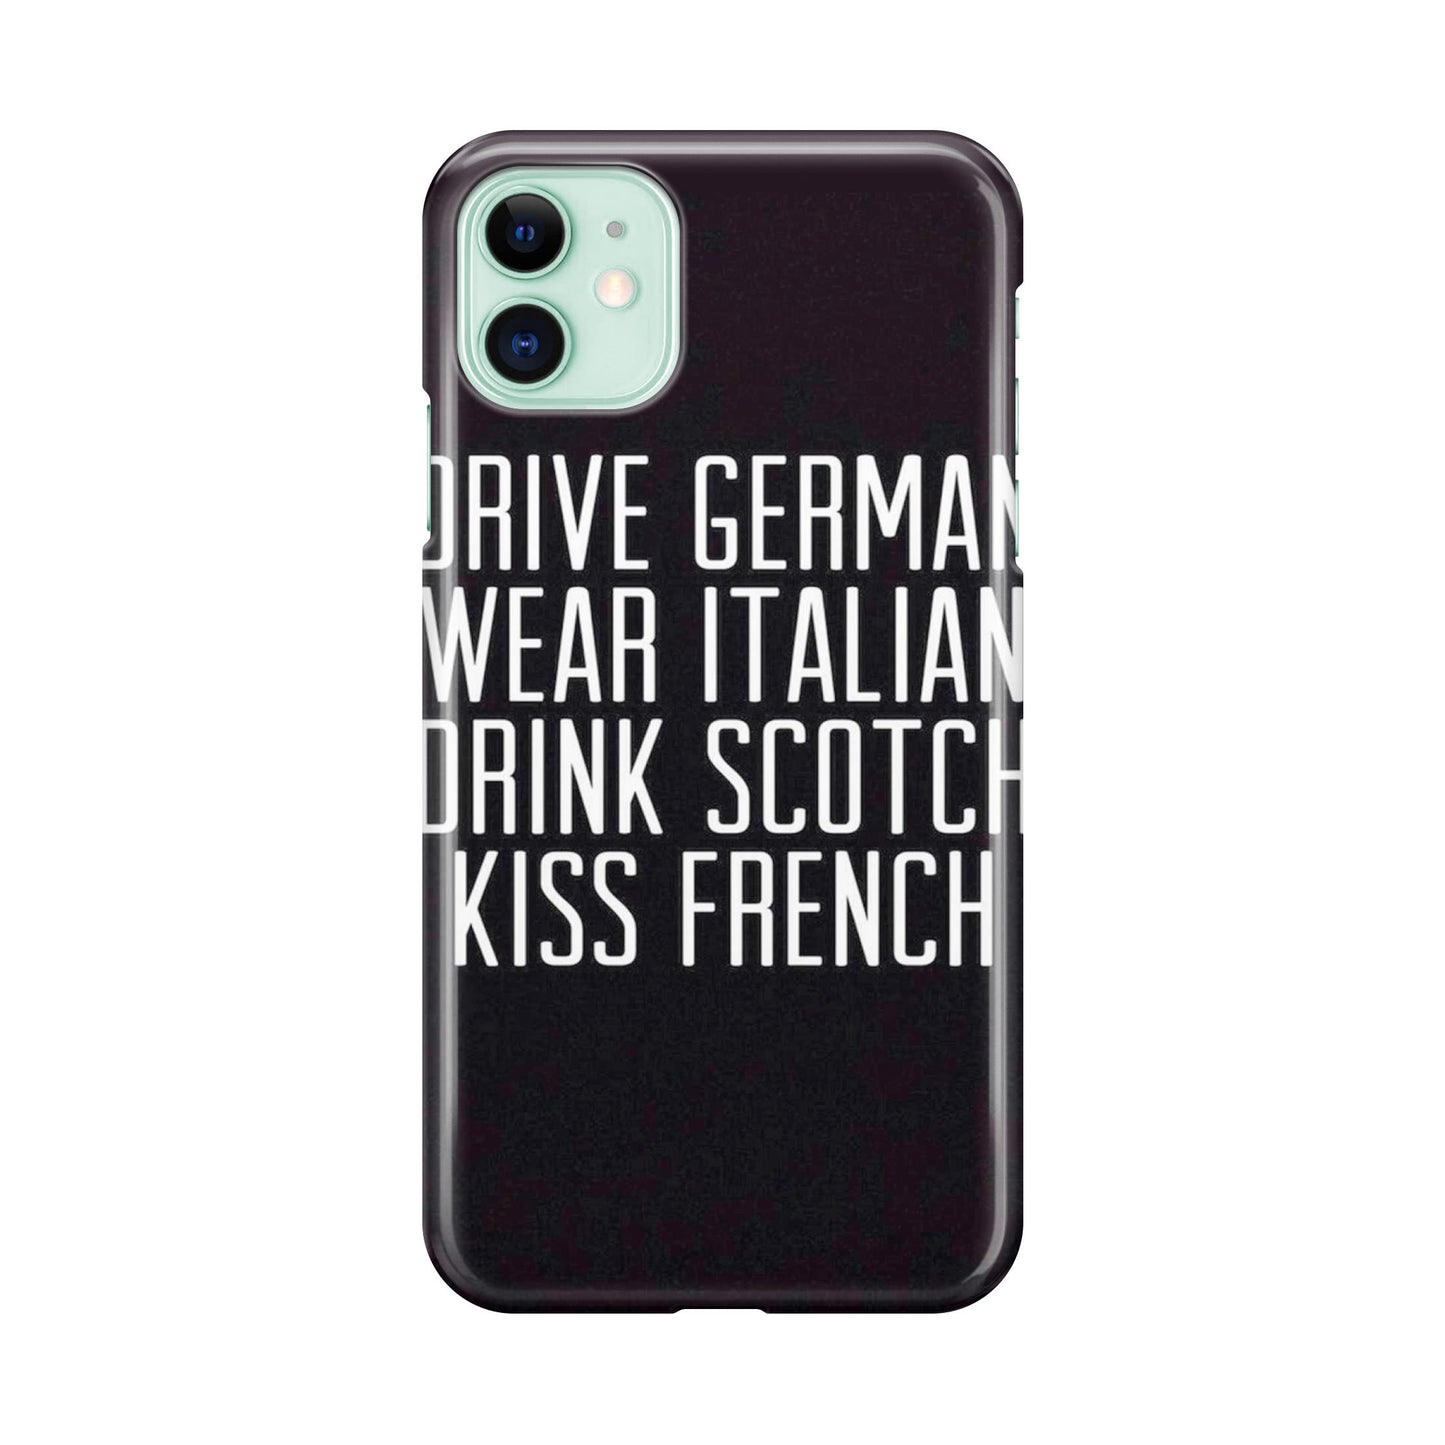 Drive German Wear Italian Drink Scotch Kiss French iPhone 12 Case